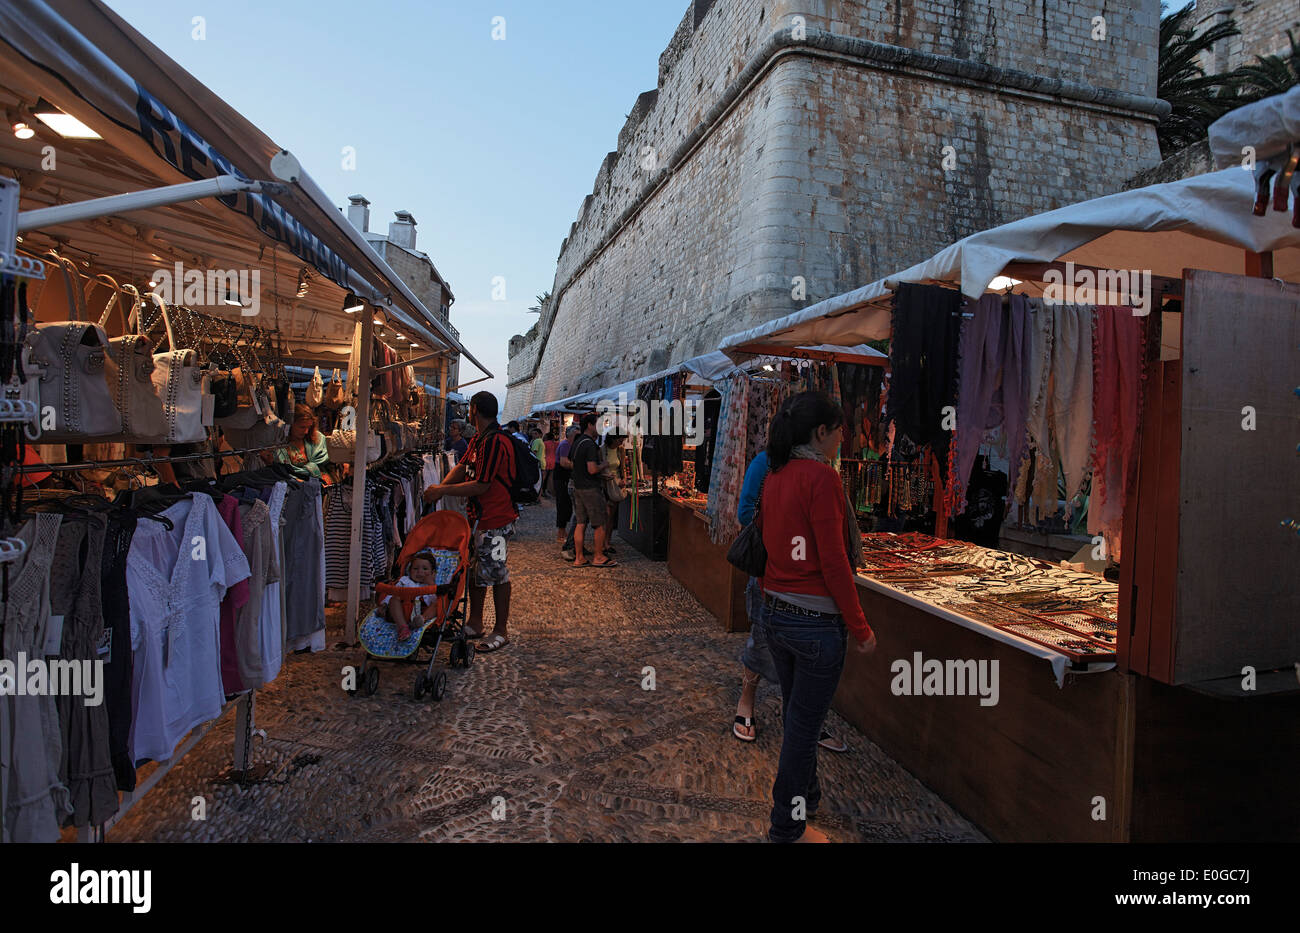 Market in old town, Costa del Azahar, Peniscola, Valencia, Spain Stock Photo